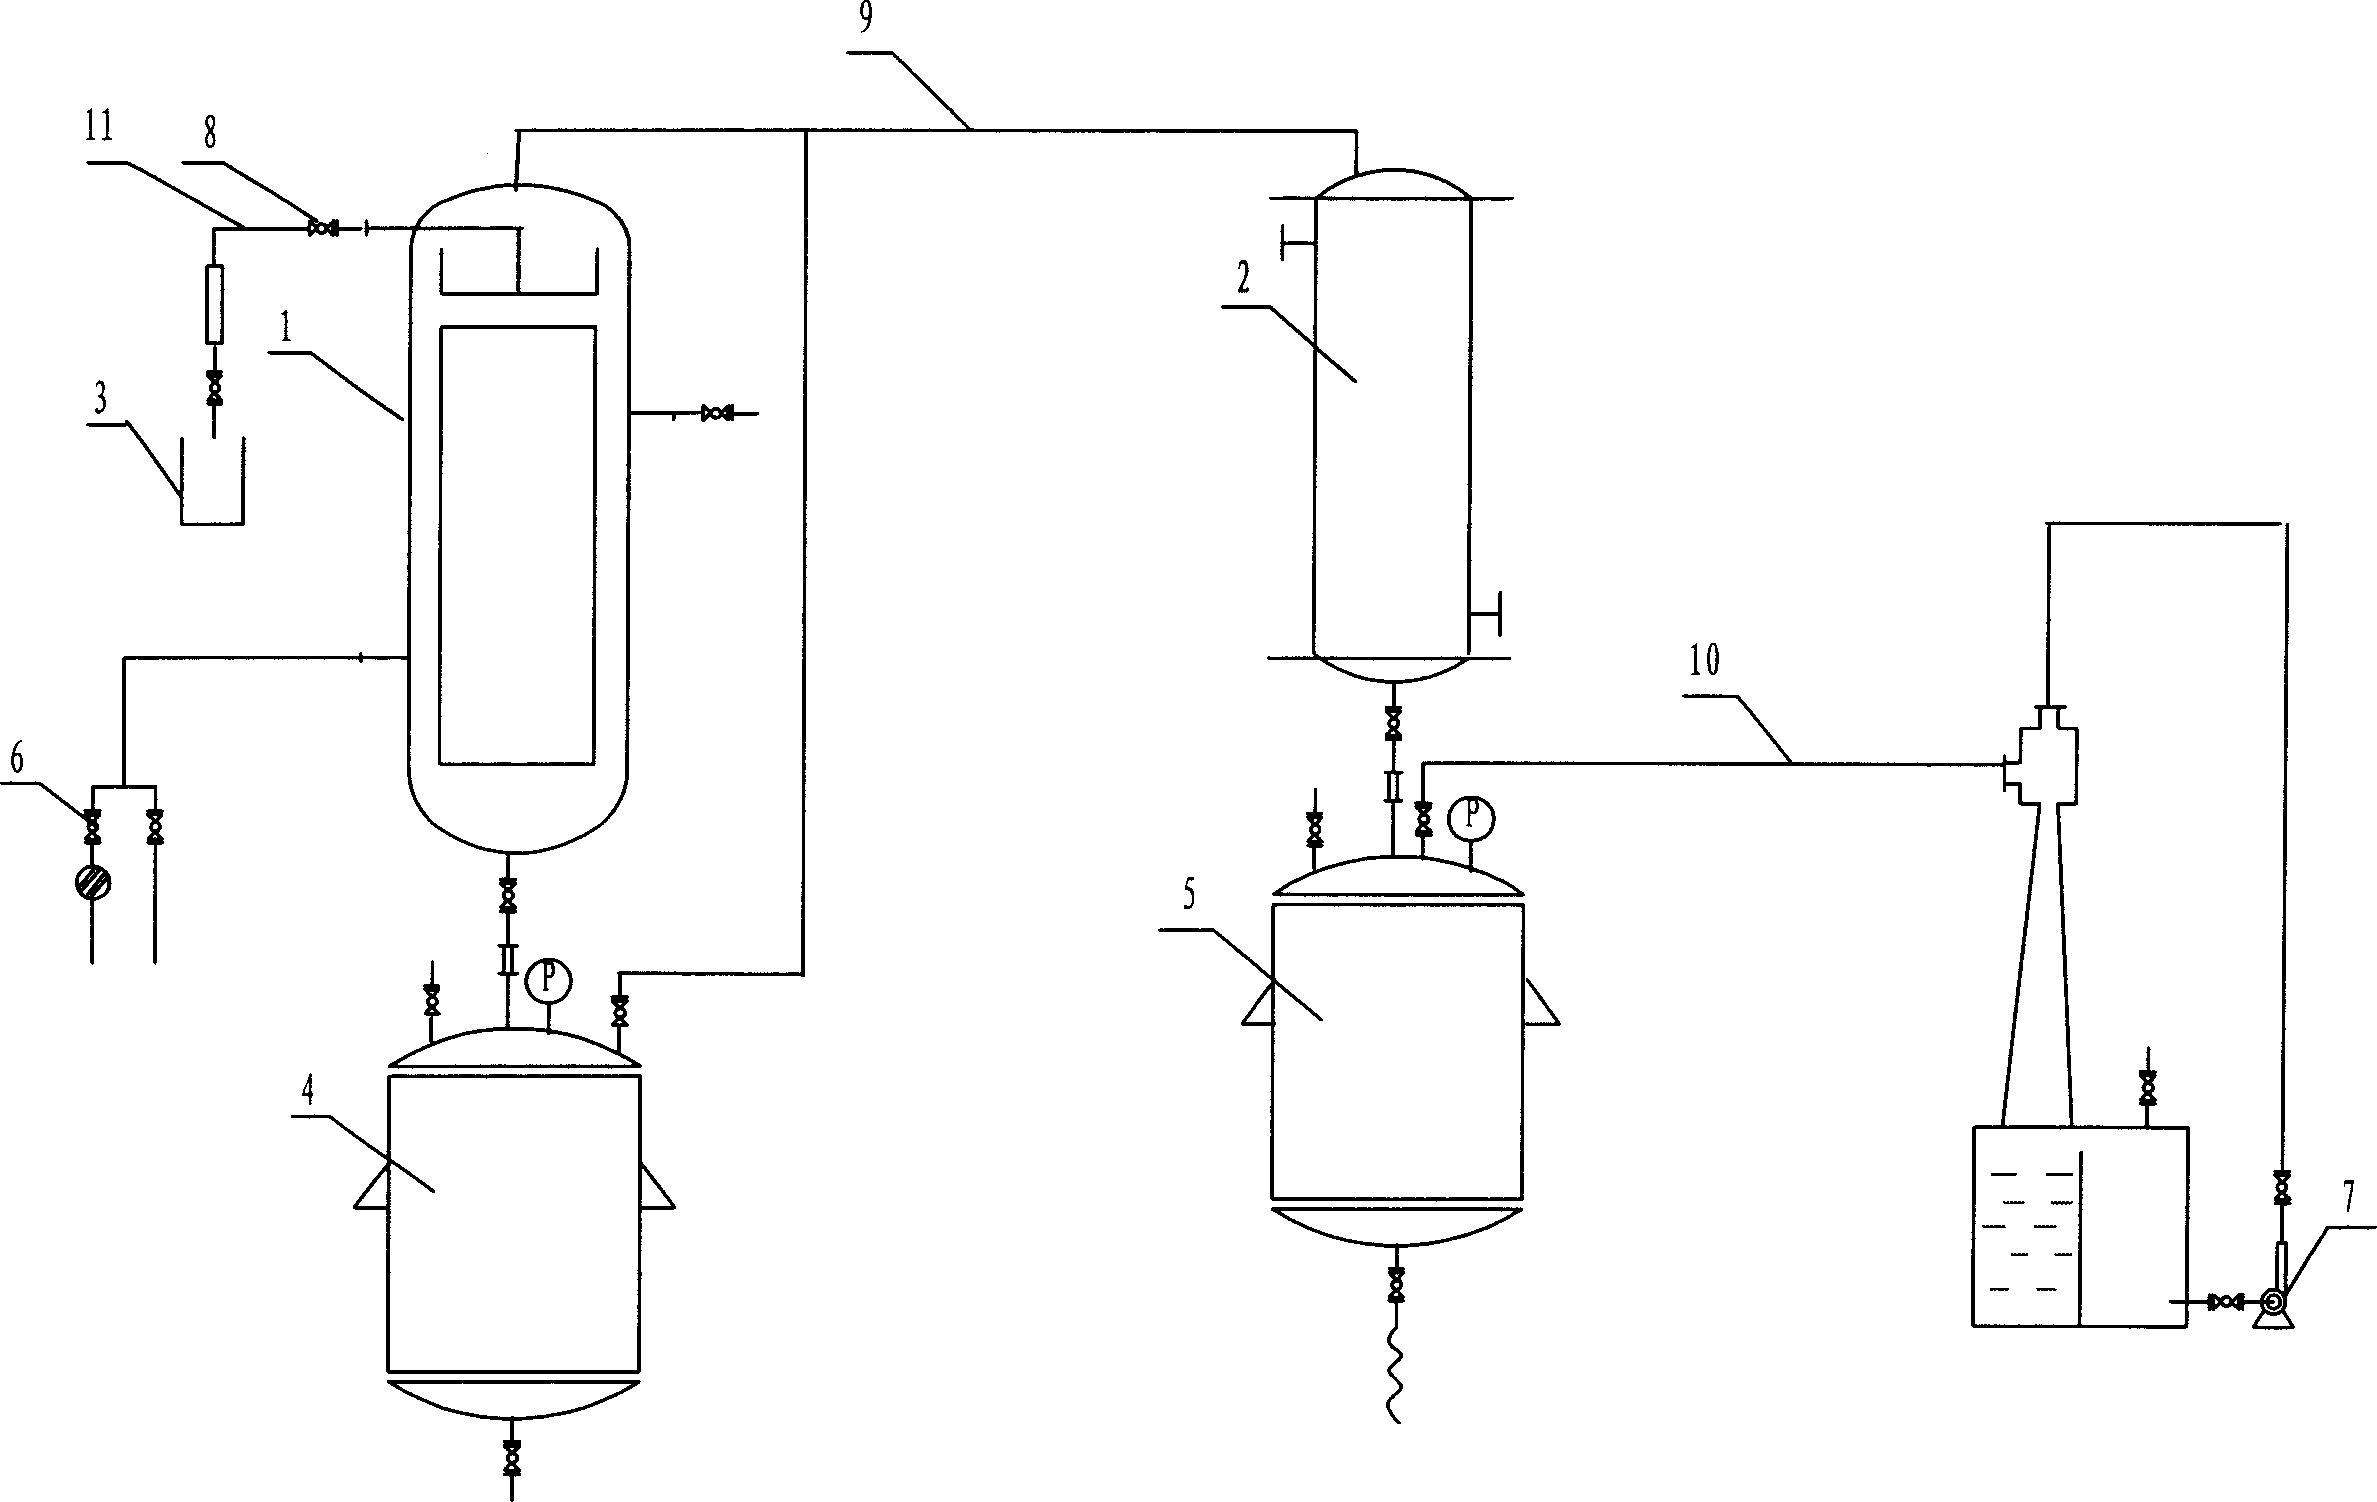 Production process of azoic disperse dye